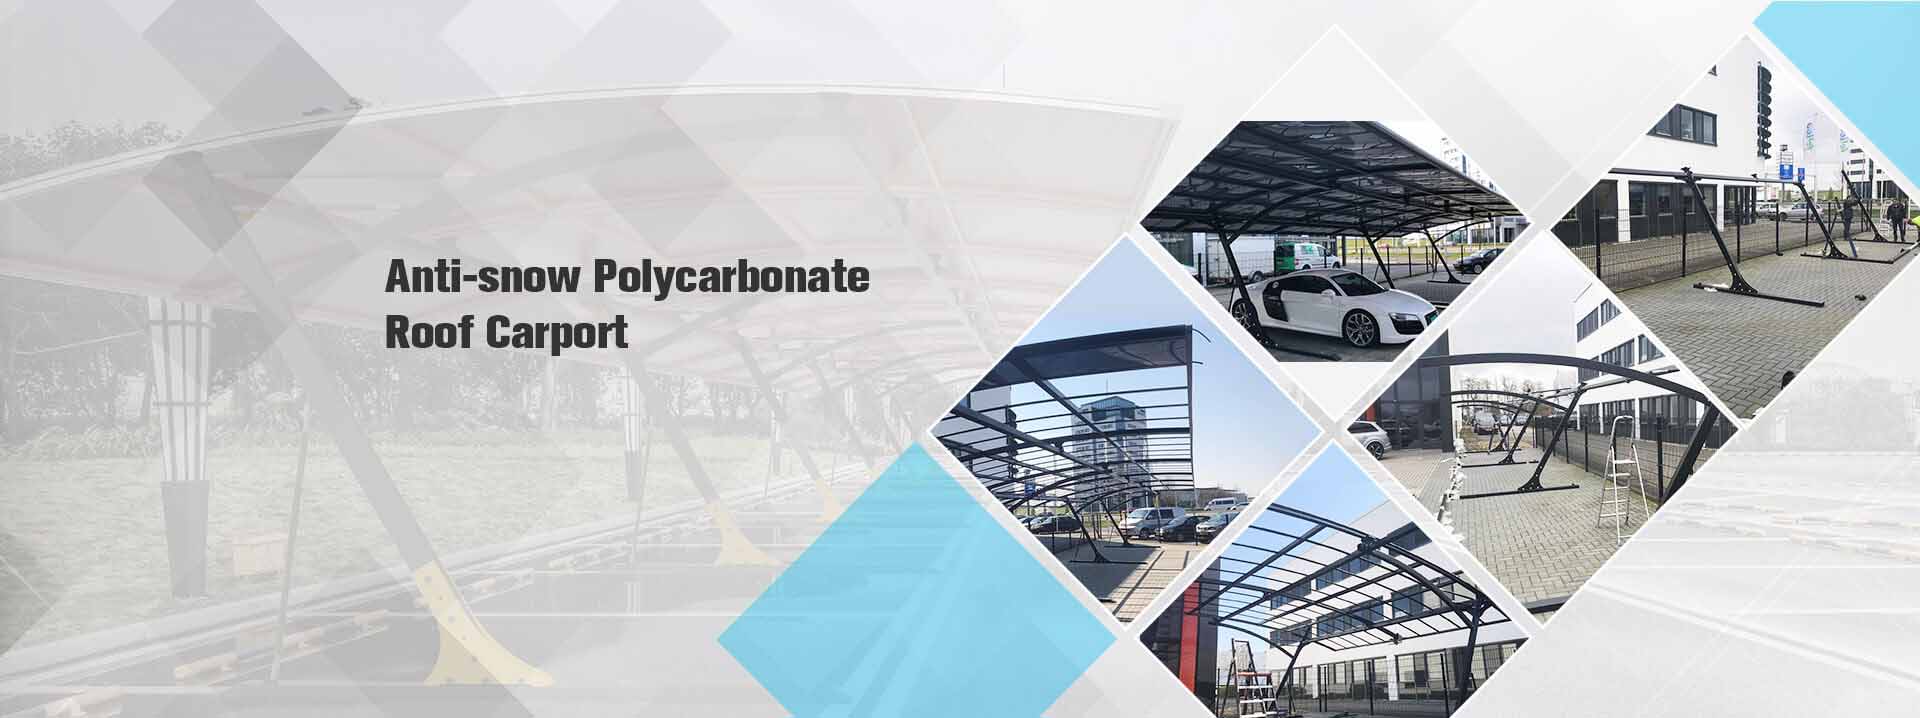 polycarbonate carport